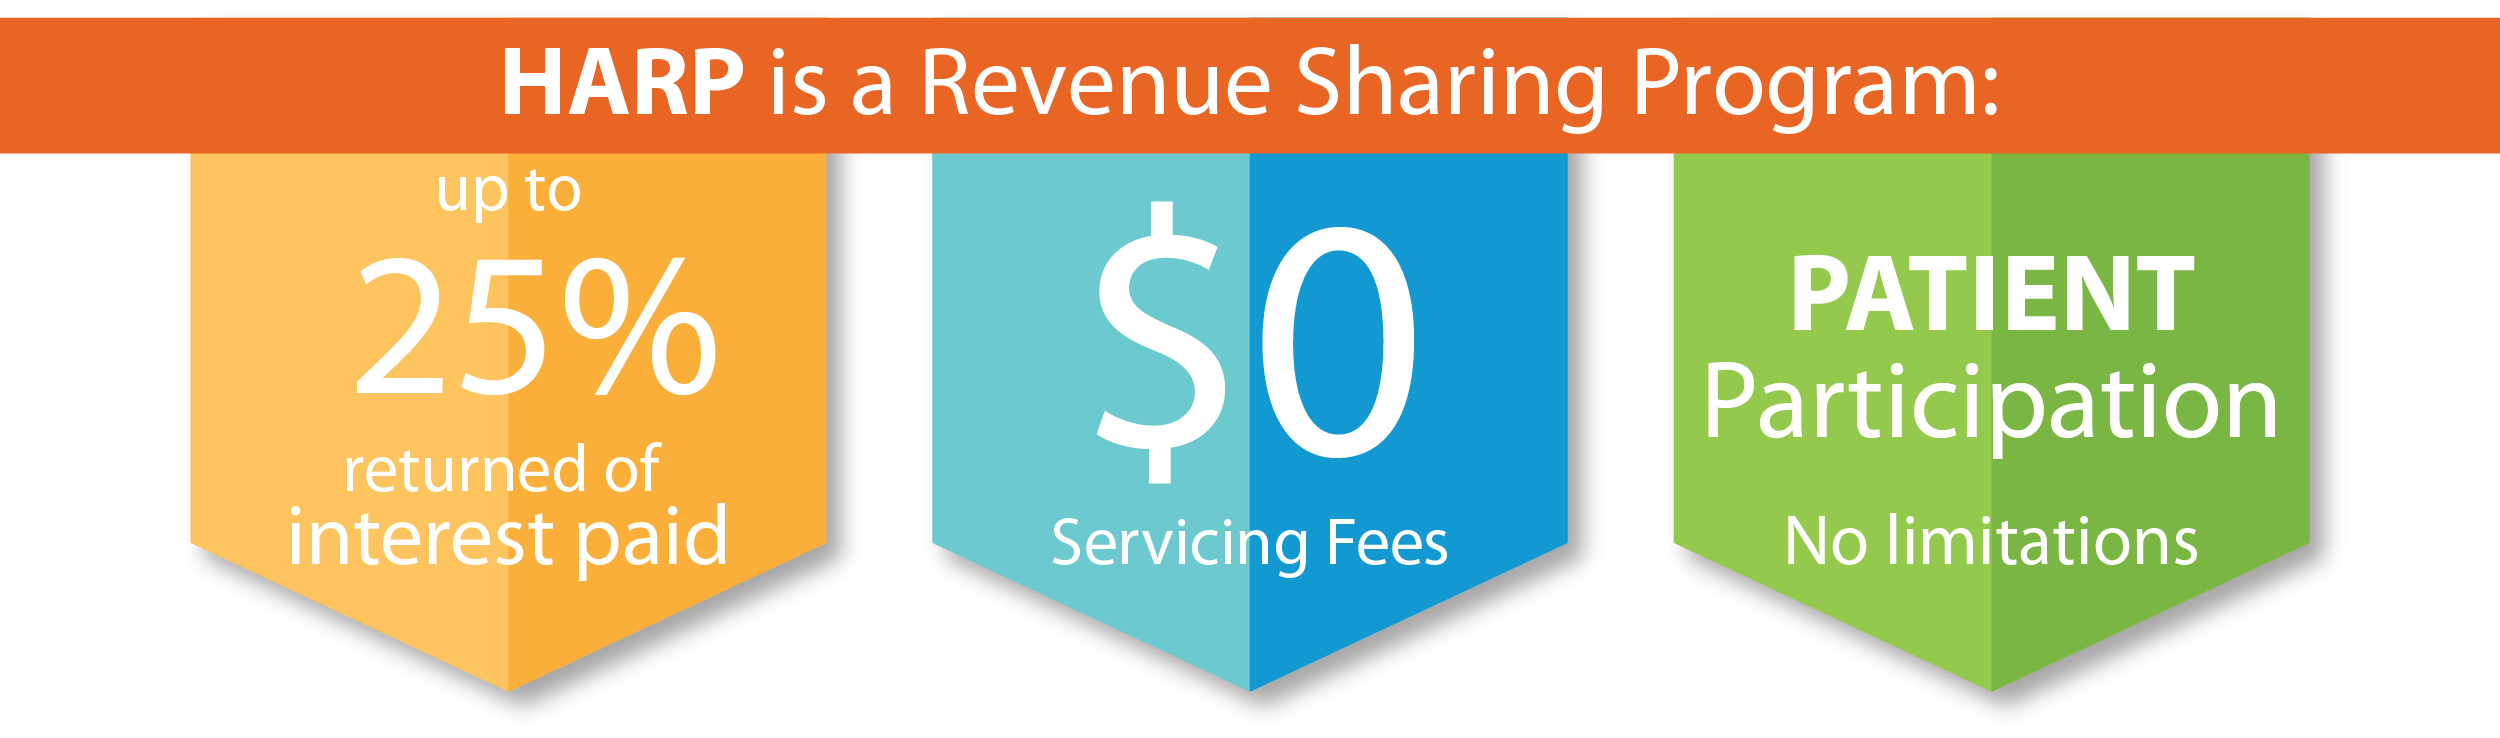 HARP is a revenue sharing program